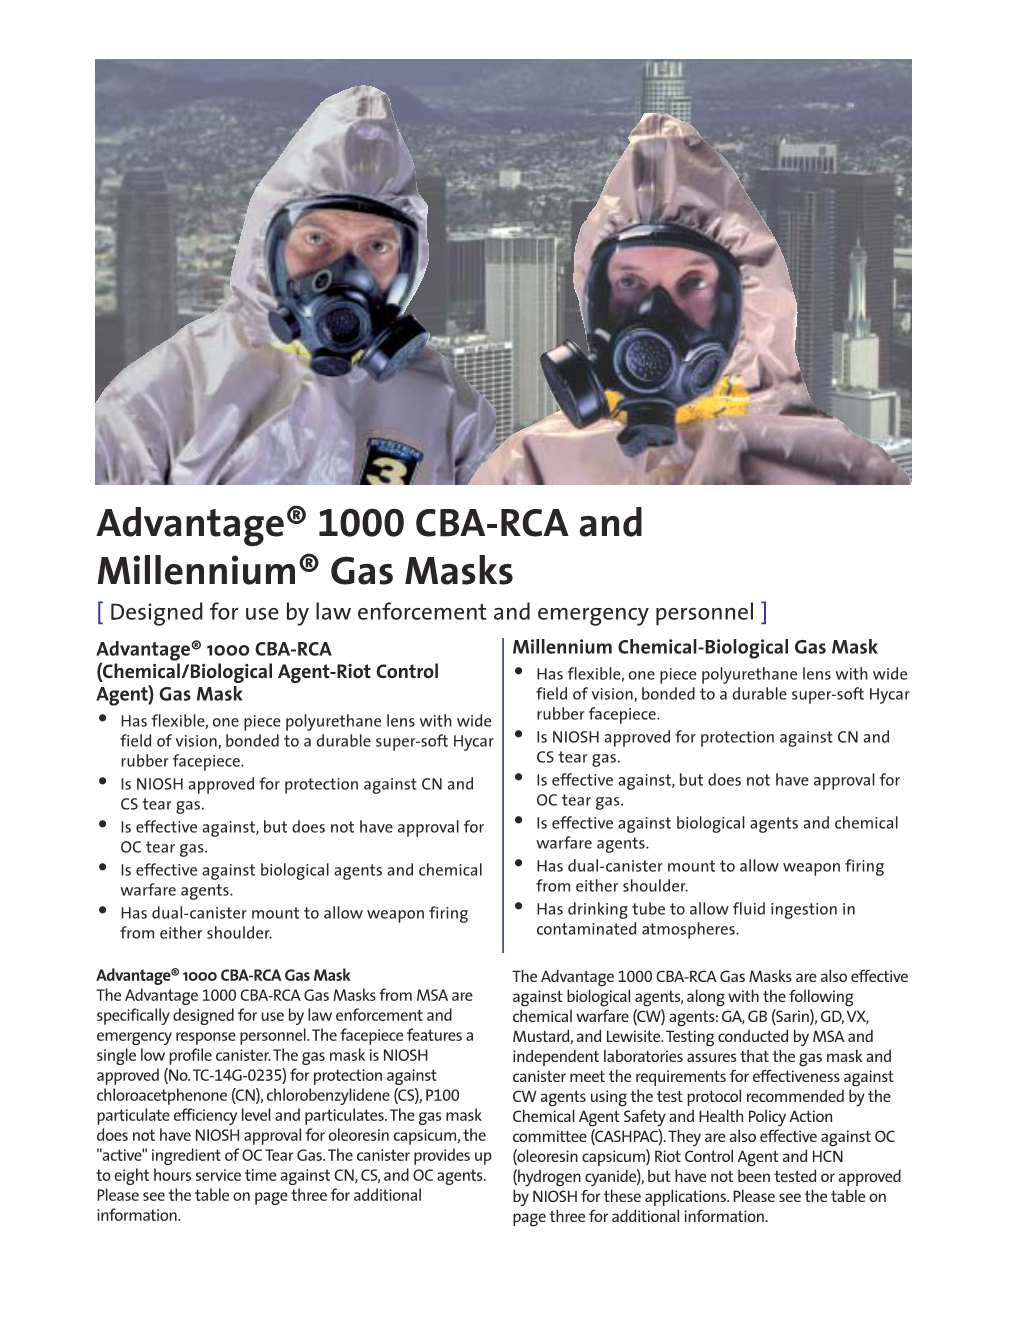 Advantage® 1000 CBA-RCA and Millennium® Gas Masks